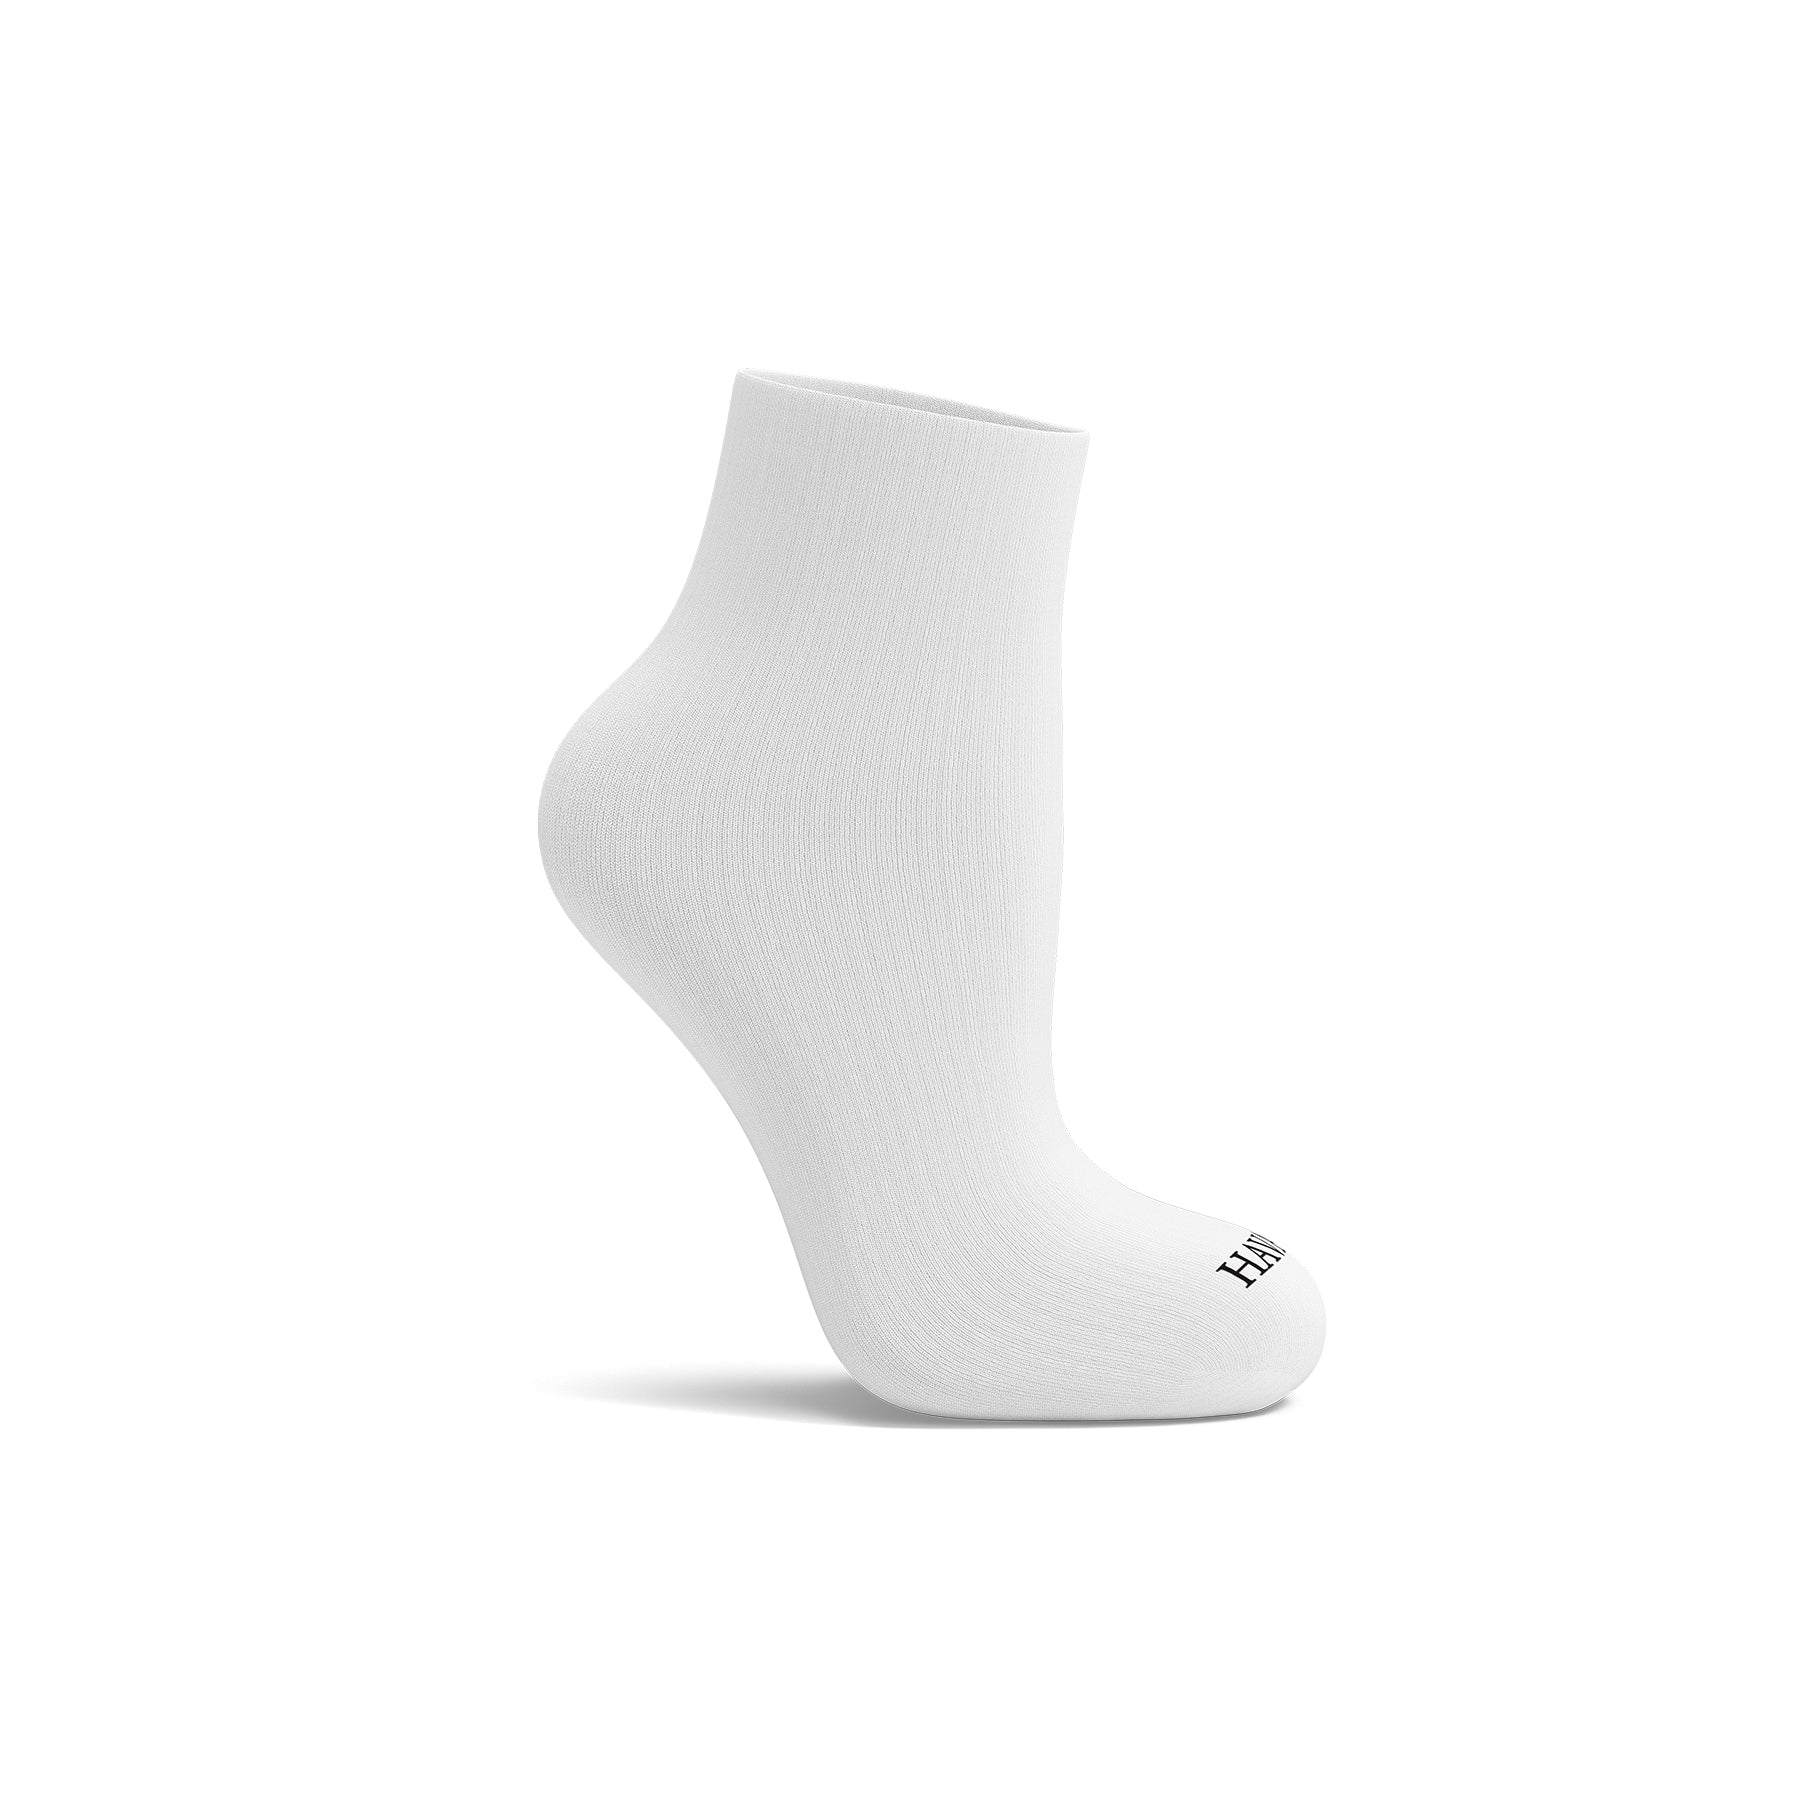 plain white half socks